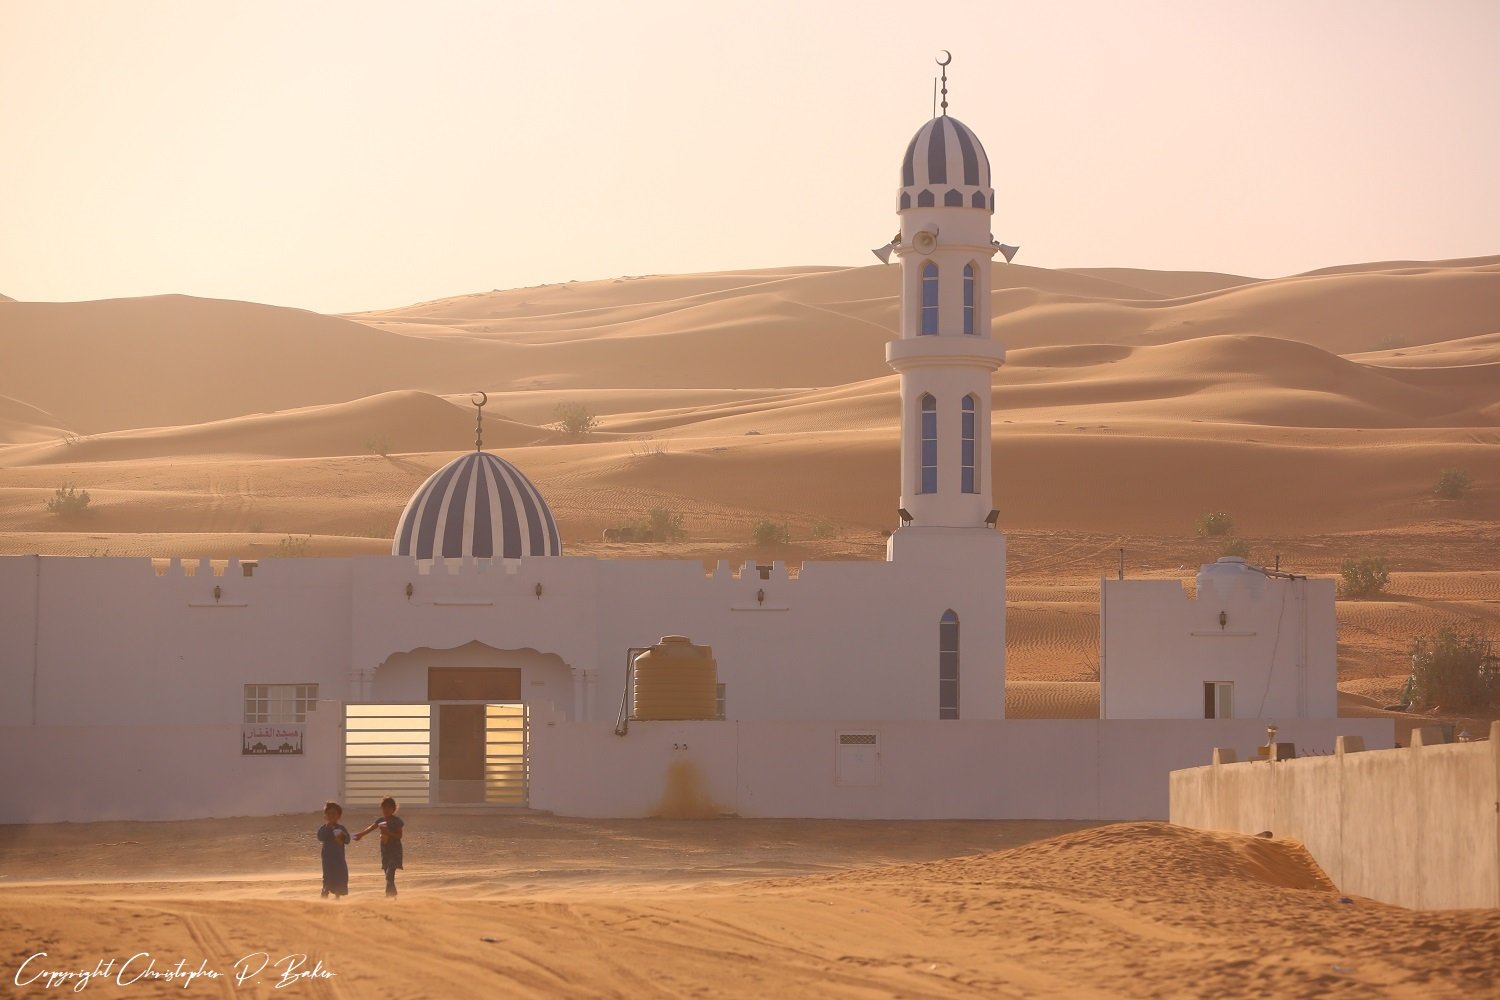 Children at mosque Sharqiya Sands Oman copyright Christopher P Baker